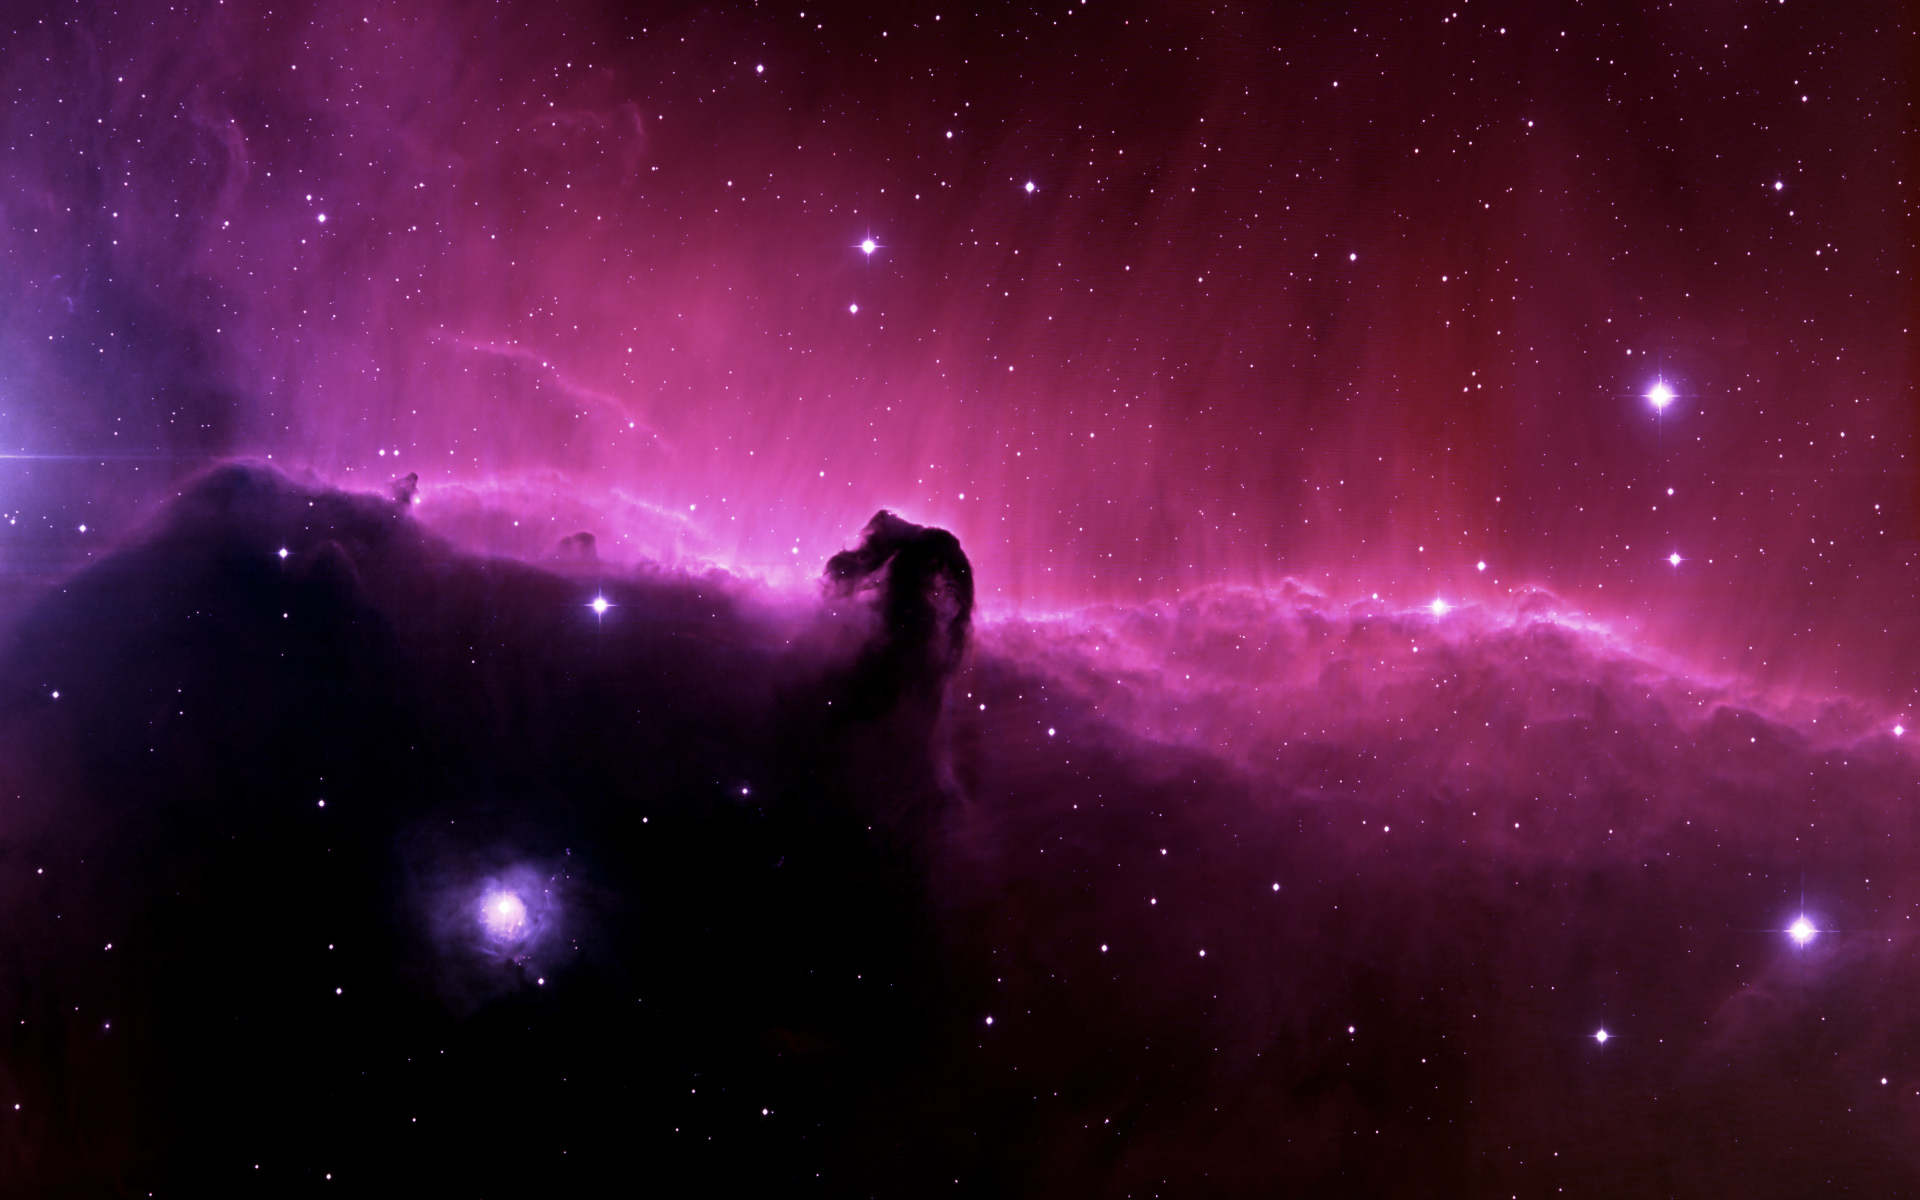 outer space, Horsehead Nebula - desktop wallpaper